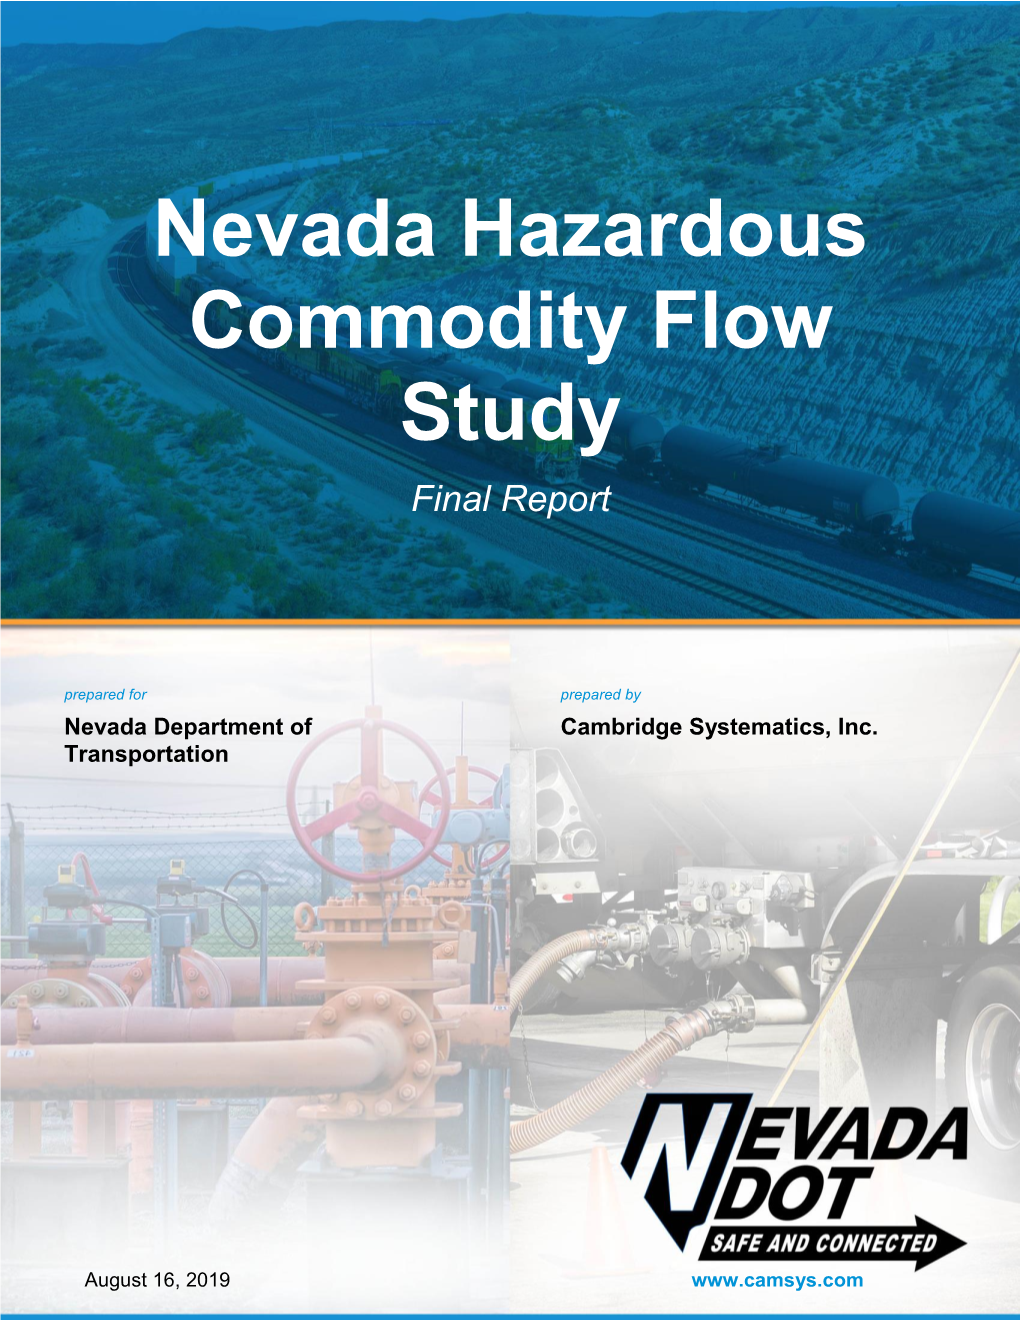 Hazardous Commodity Flow Study Final Report